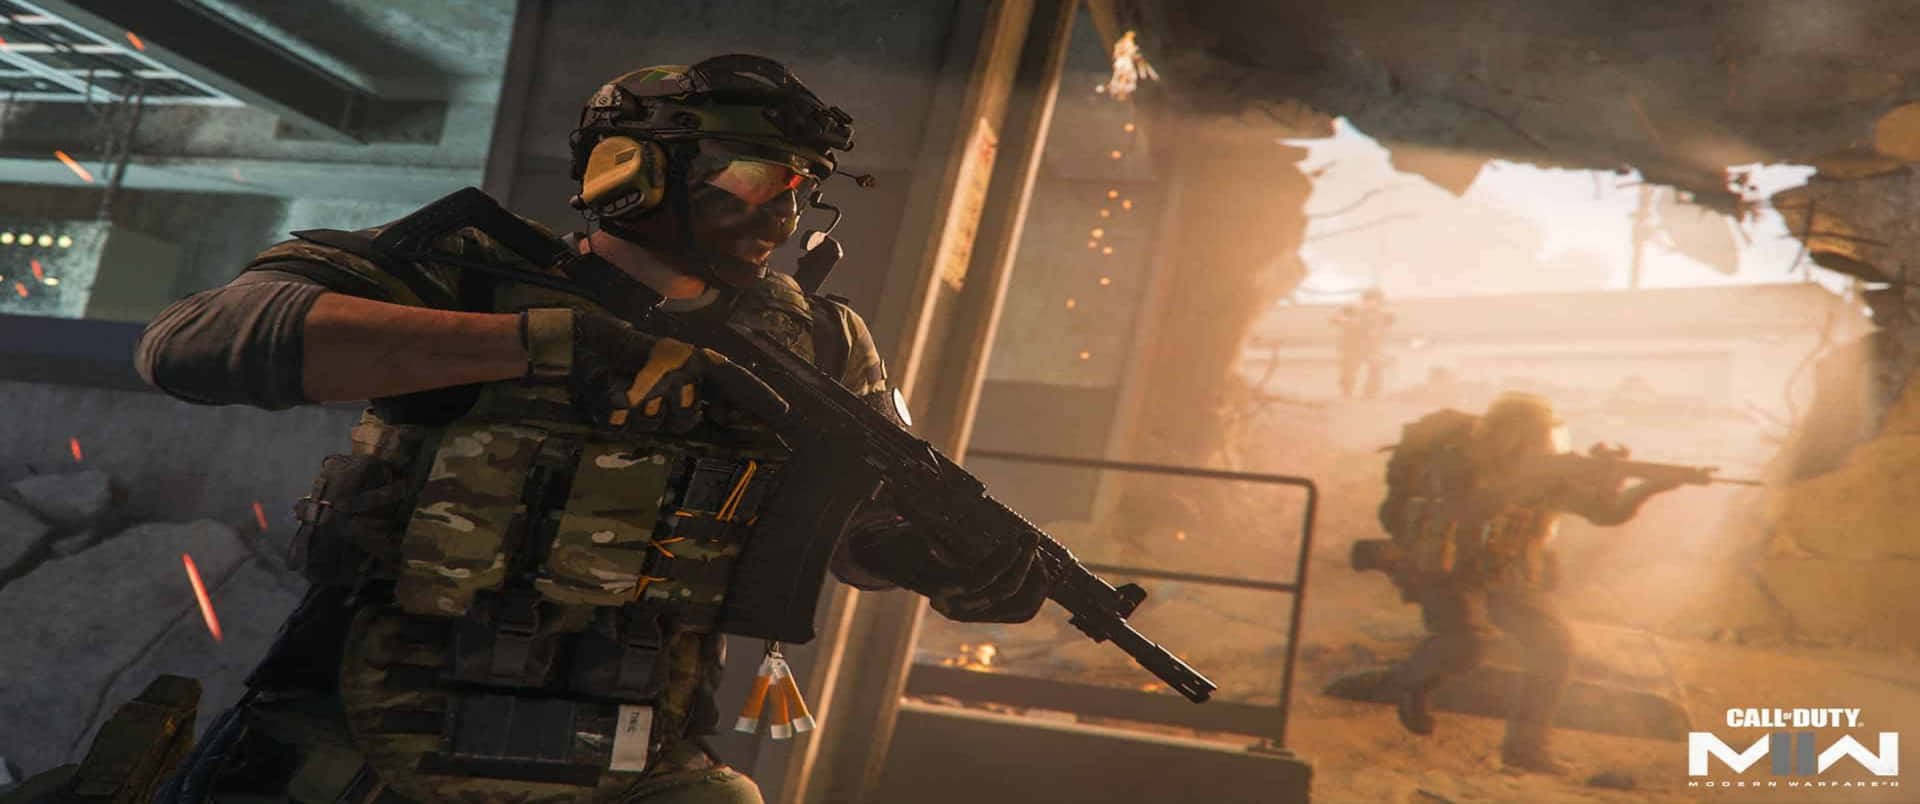 Johnprice Ambush Sfondo Call Of Duty Modern Warfare 3440x1440p